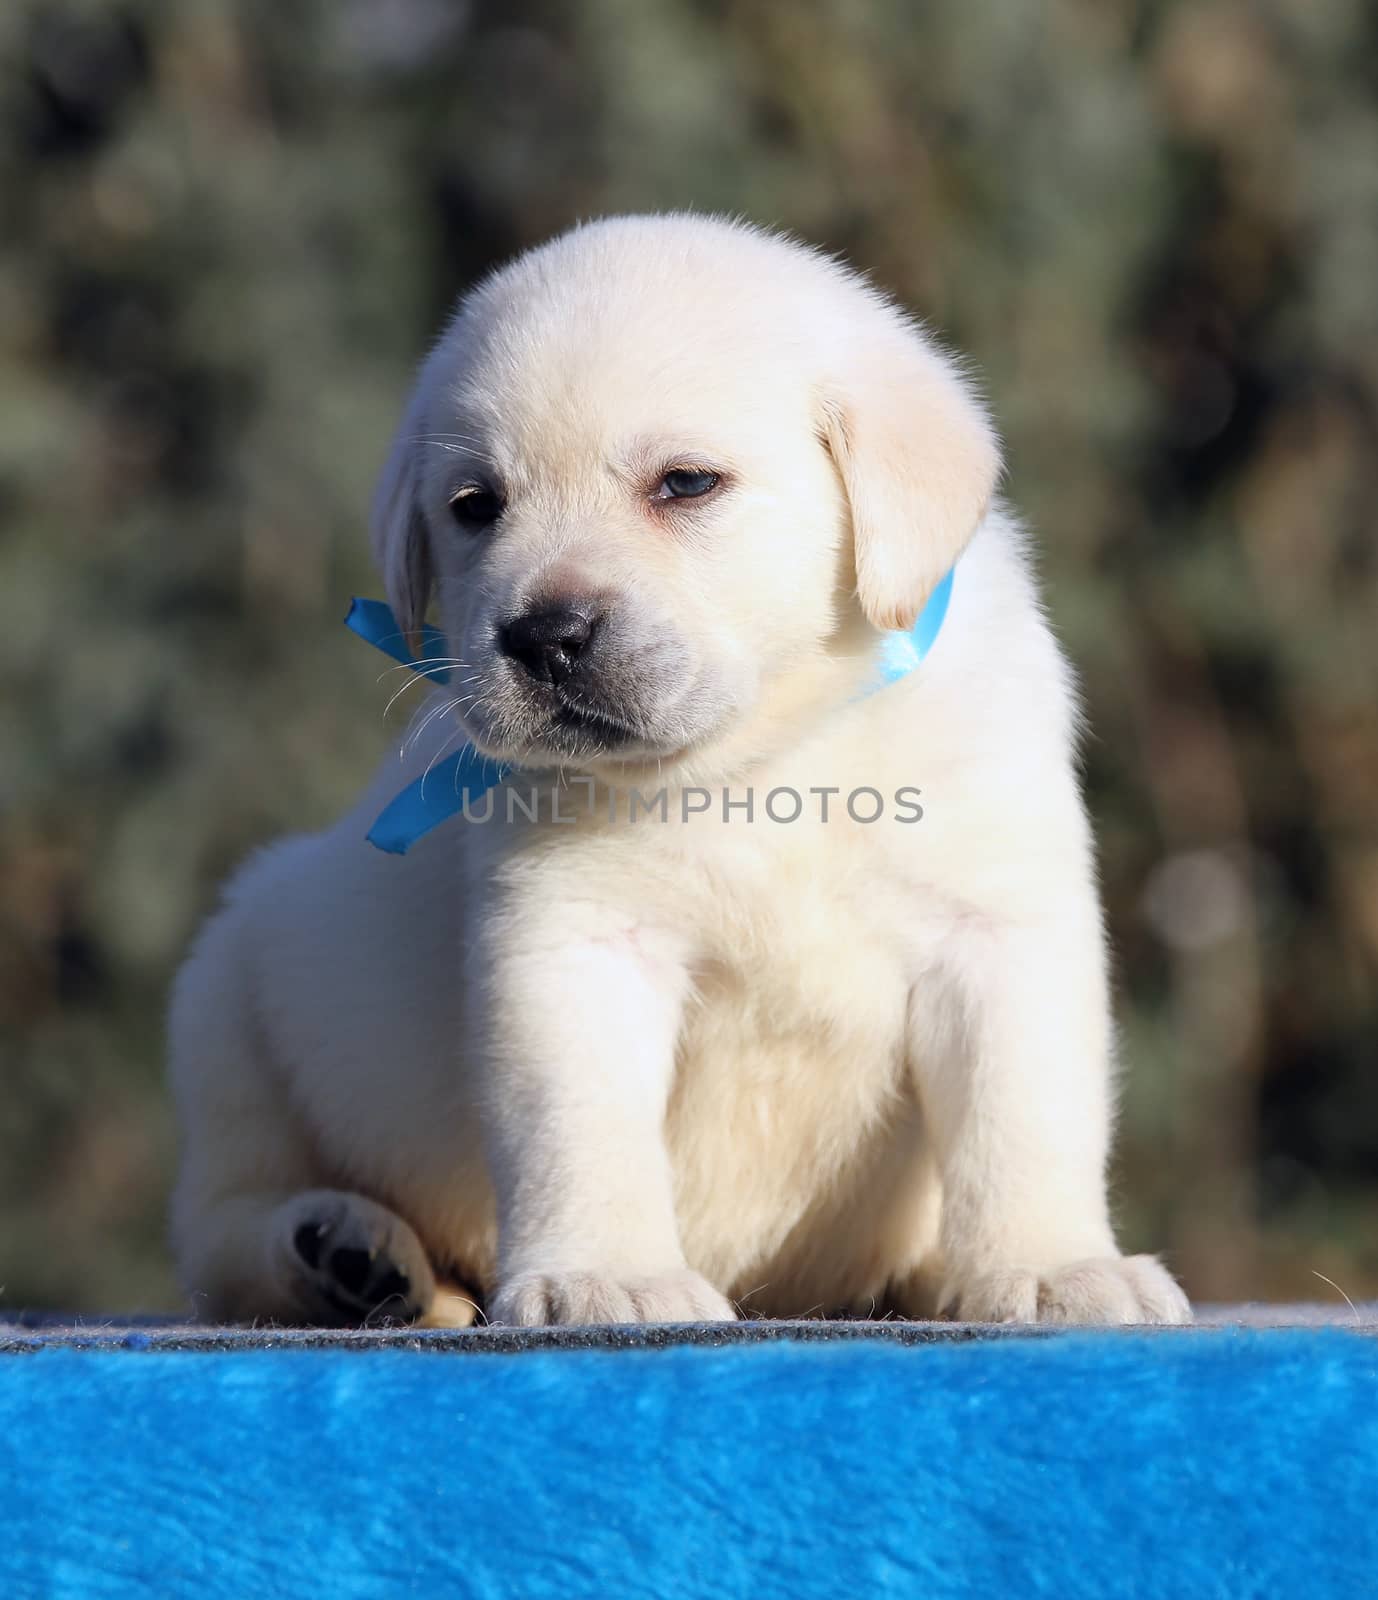 a little labrador puppy on a blue background